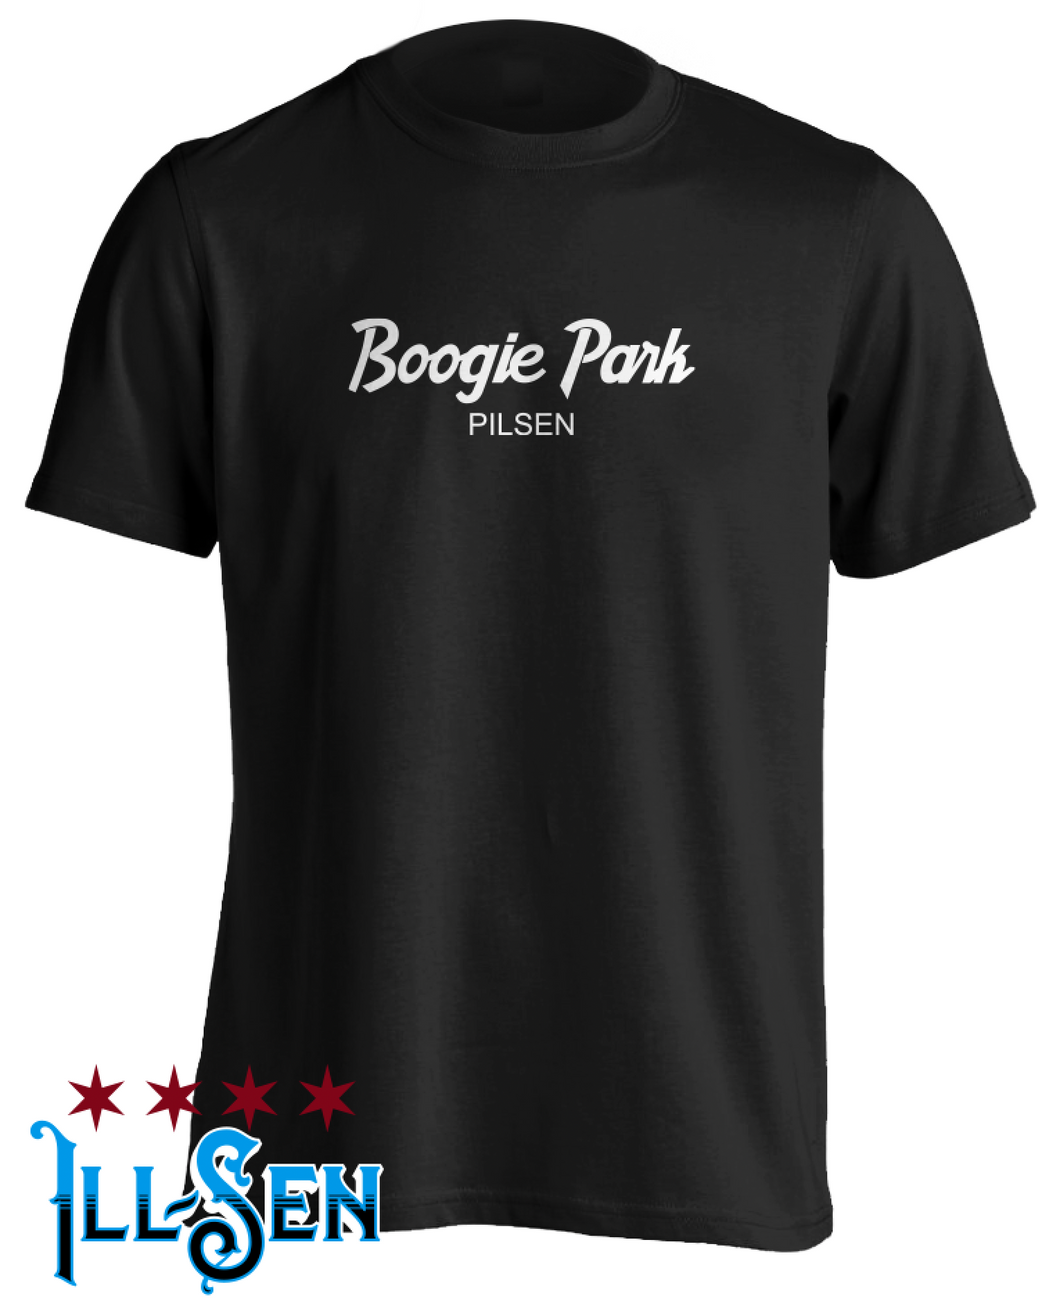 Boogie Park